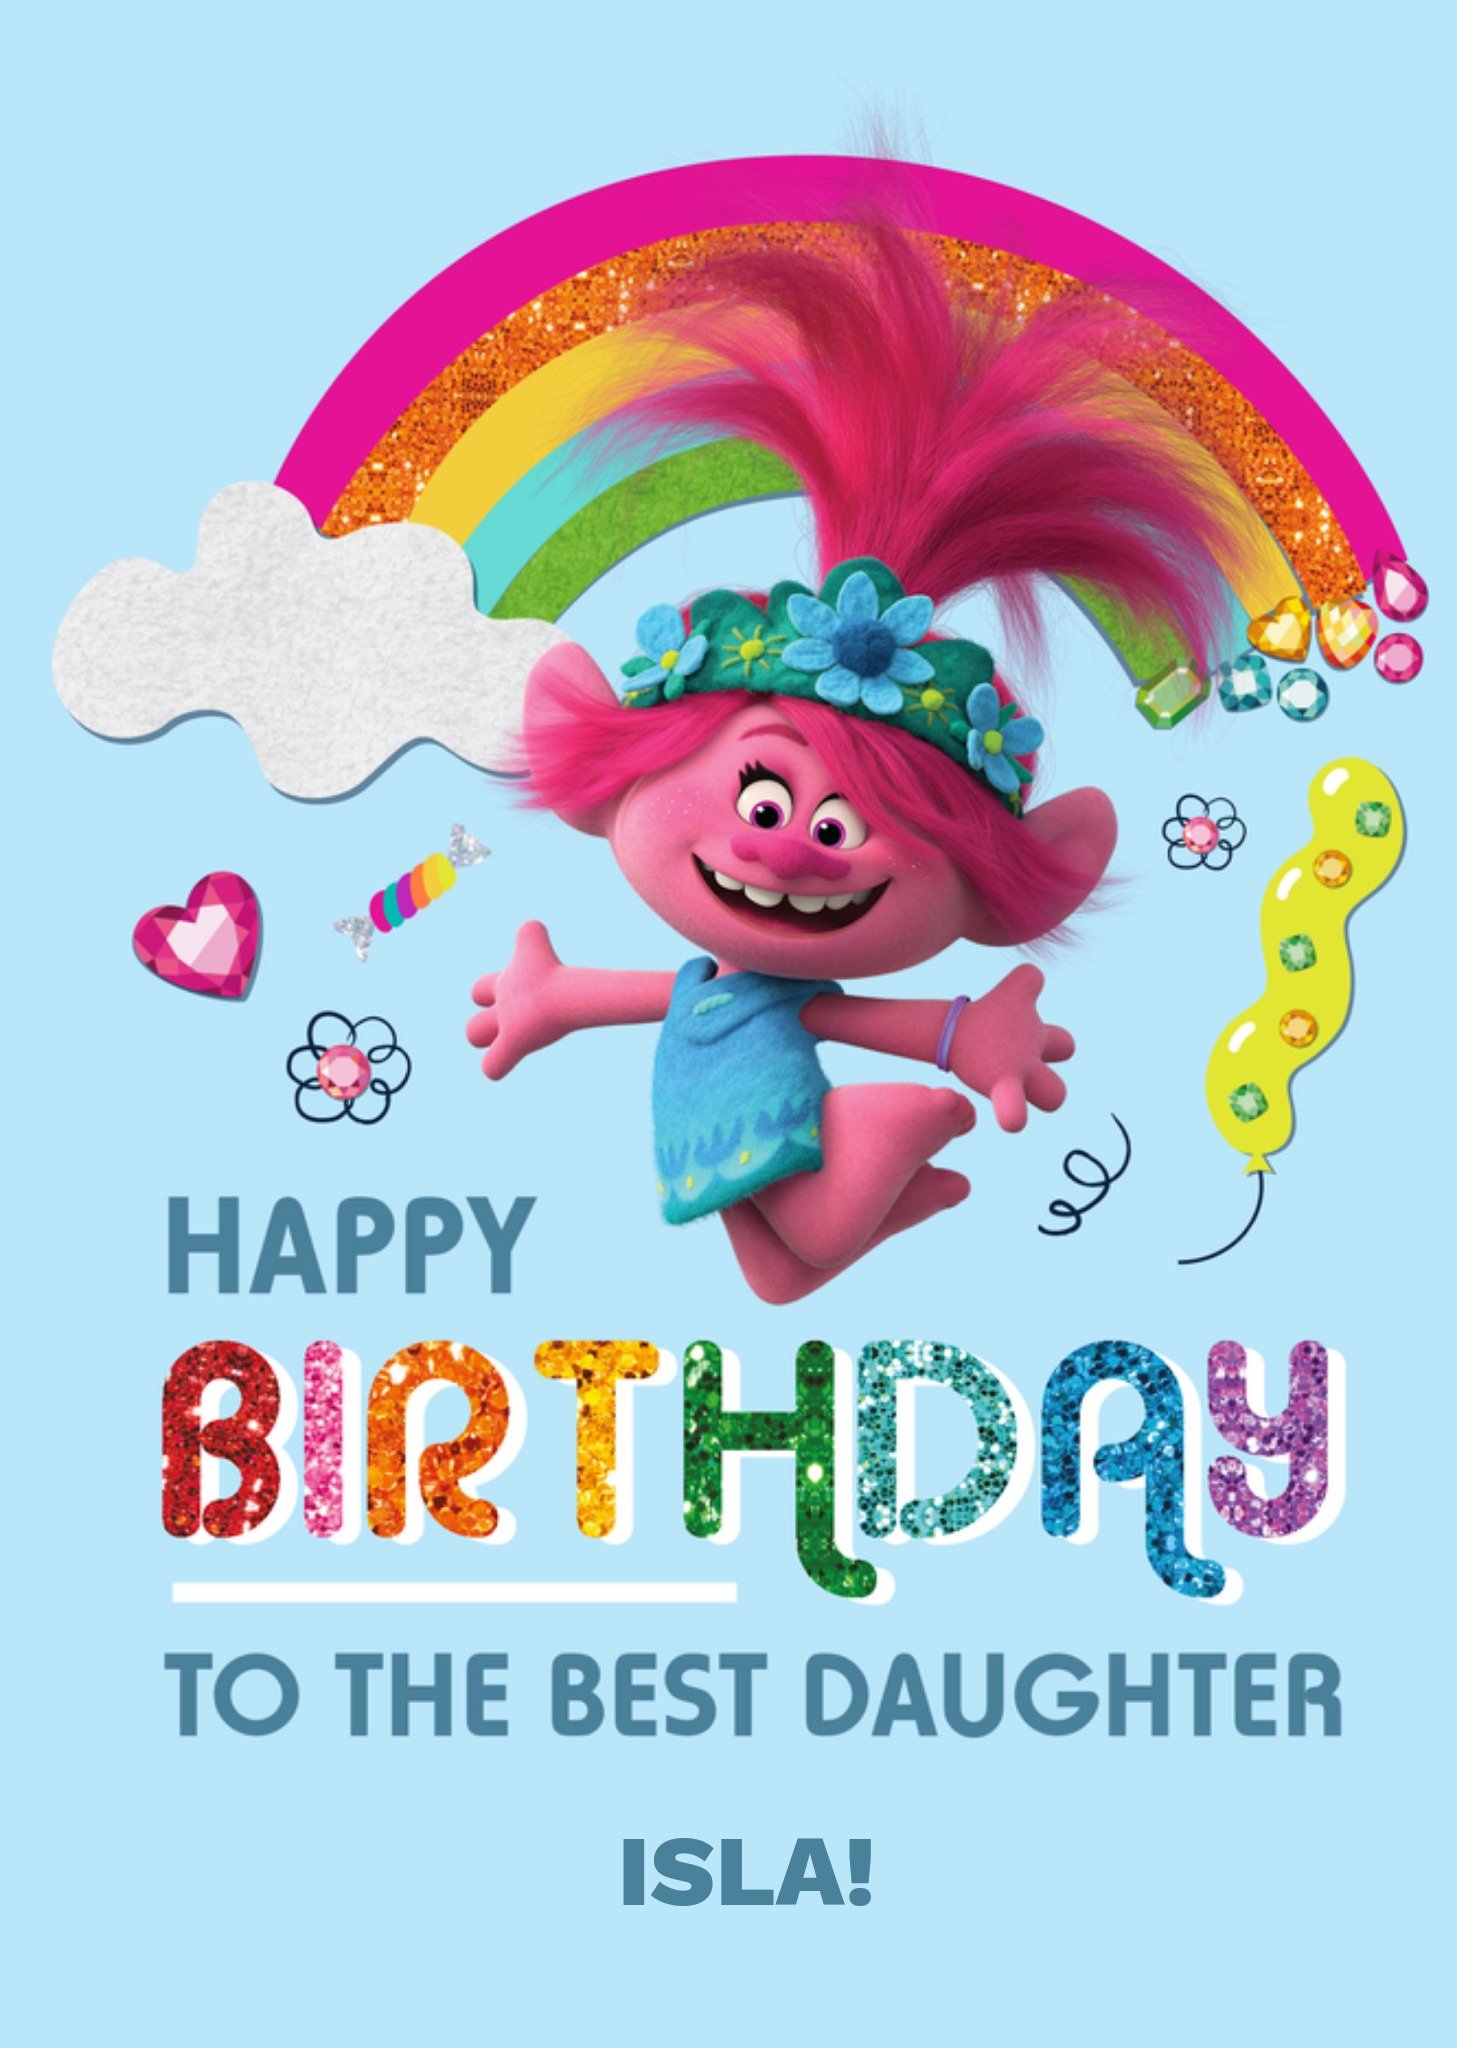 Trolls Princess Poppy Best Daughter Birthday Card, Large